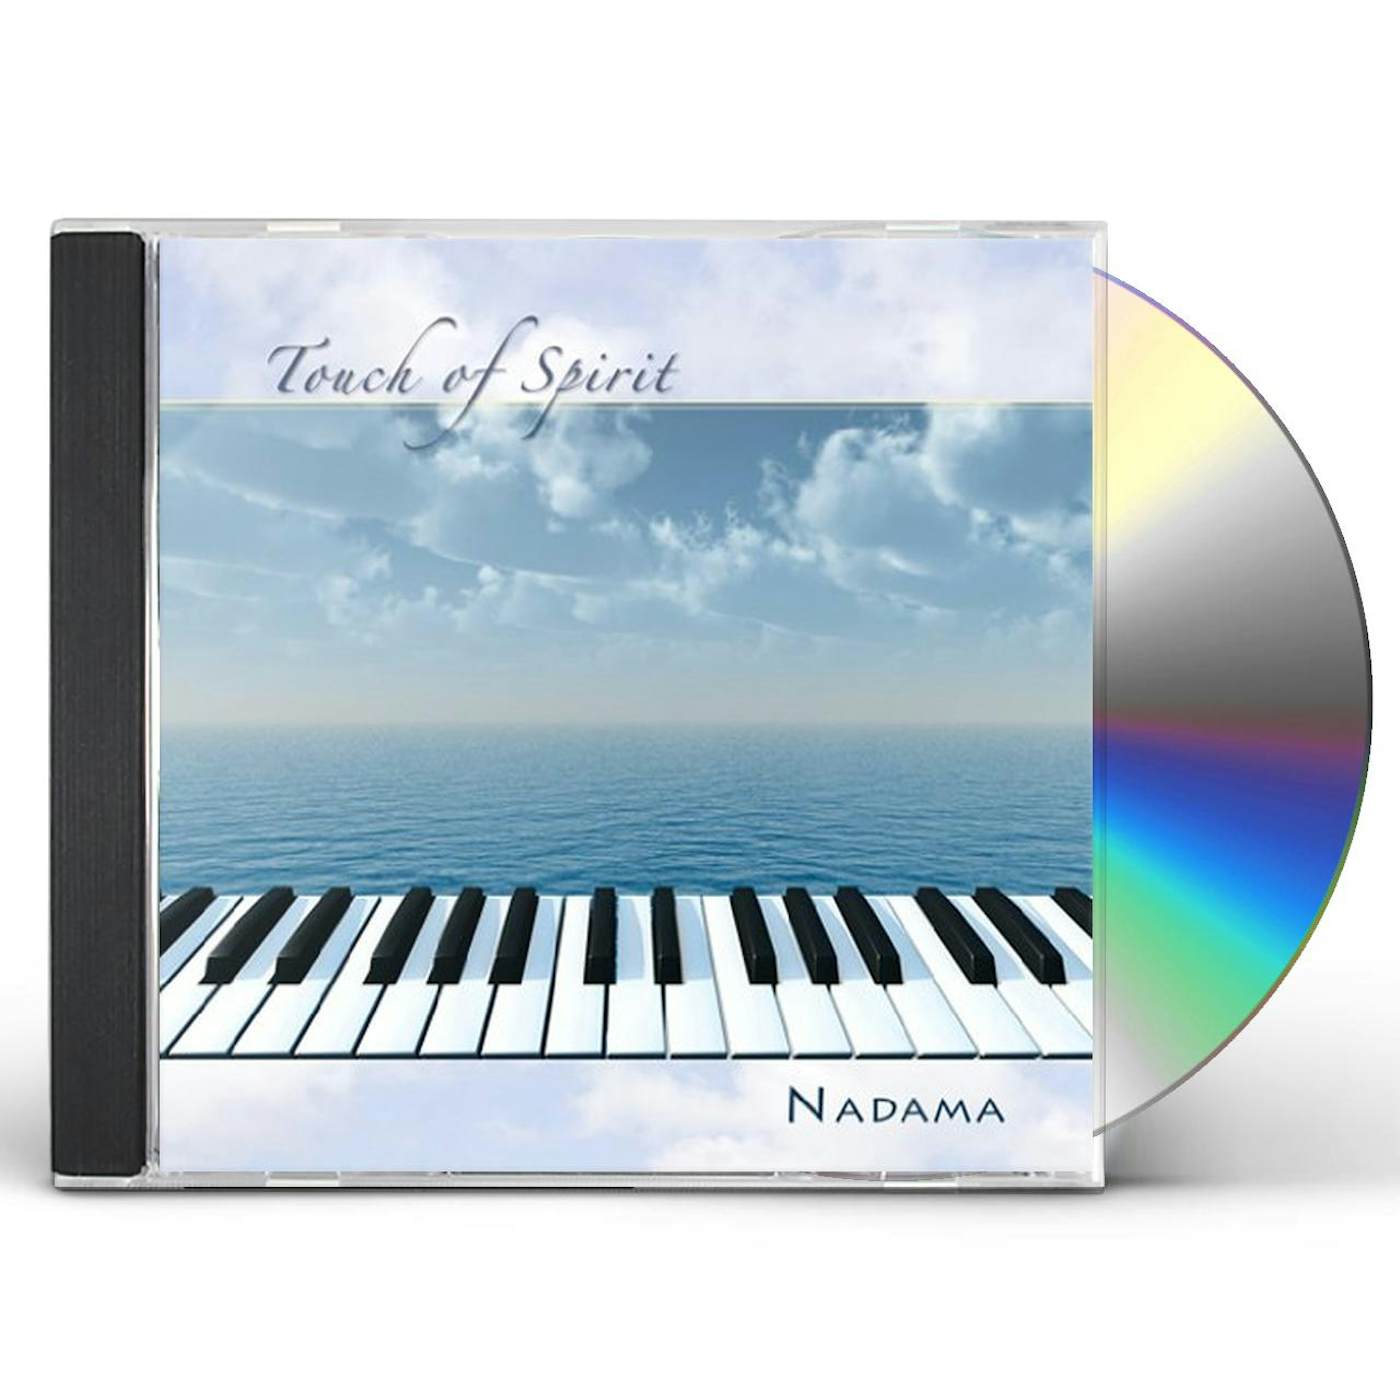 Nadama TOUCH OF SPIRIT CD